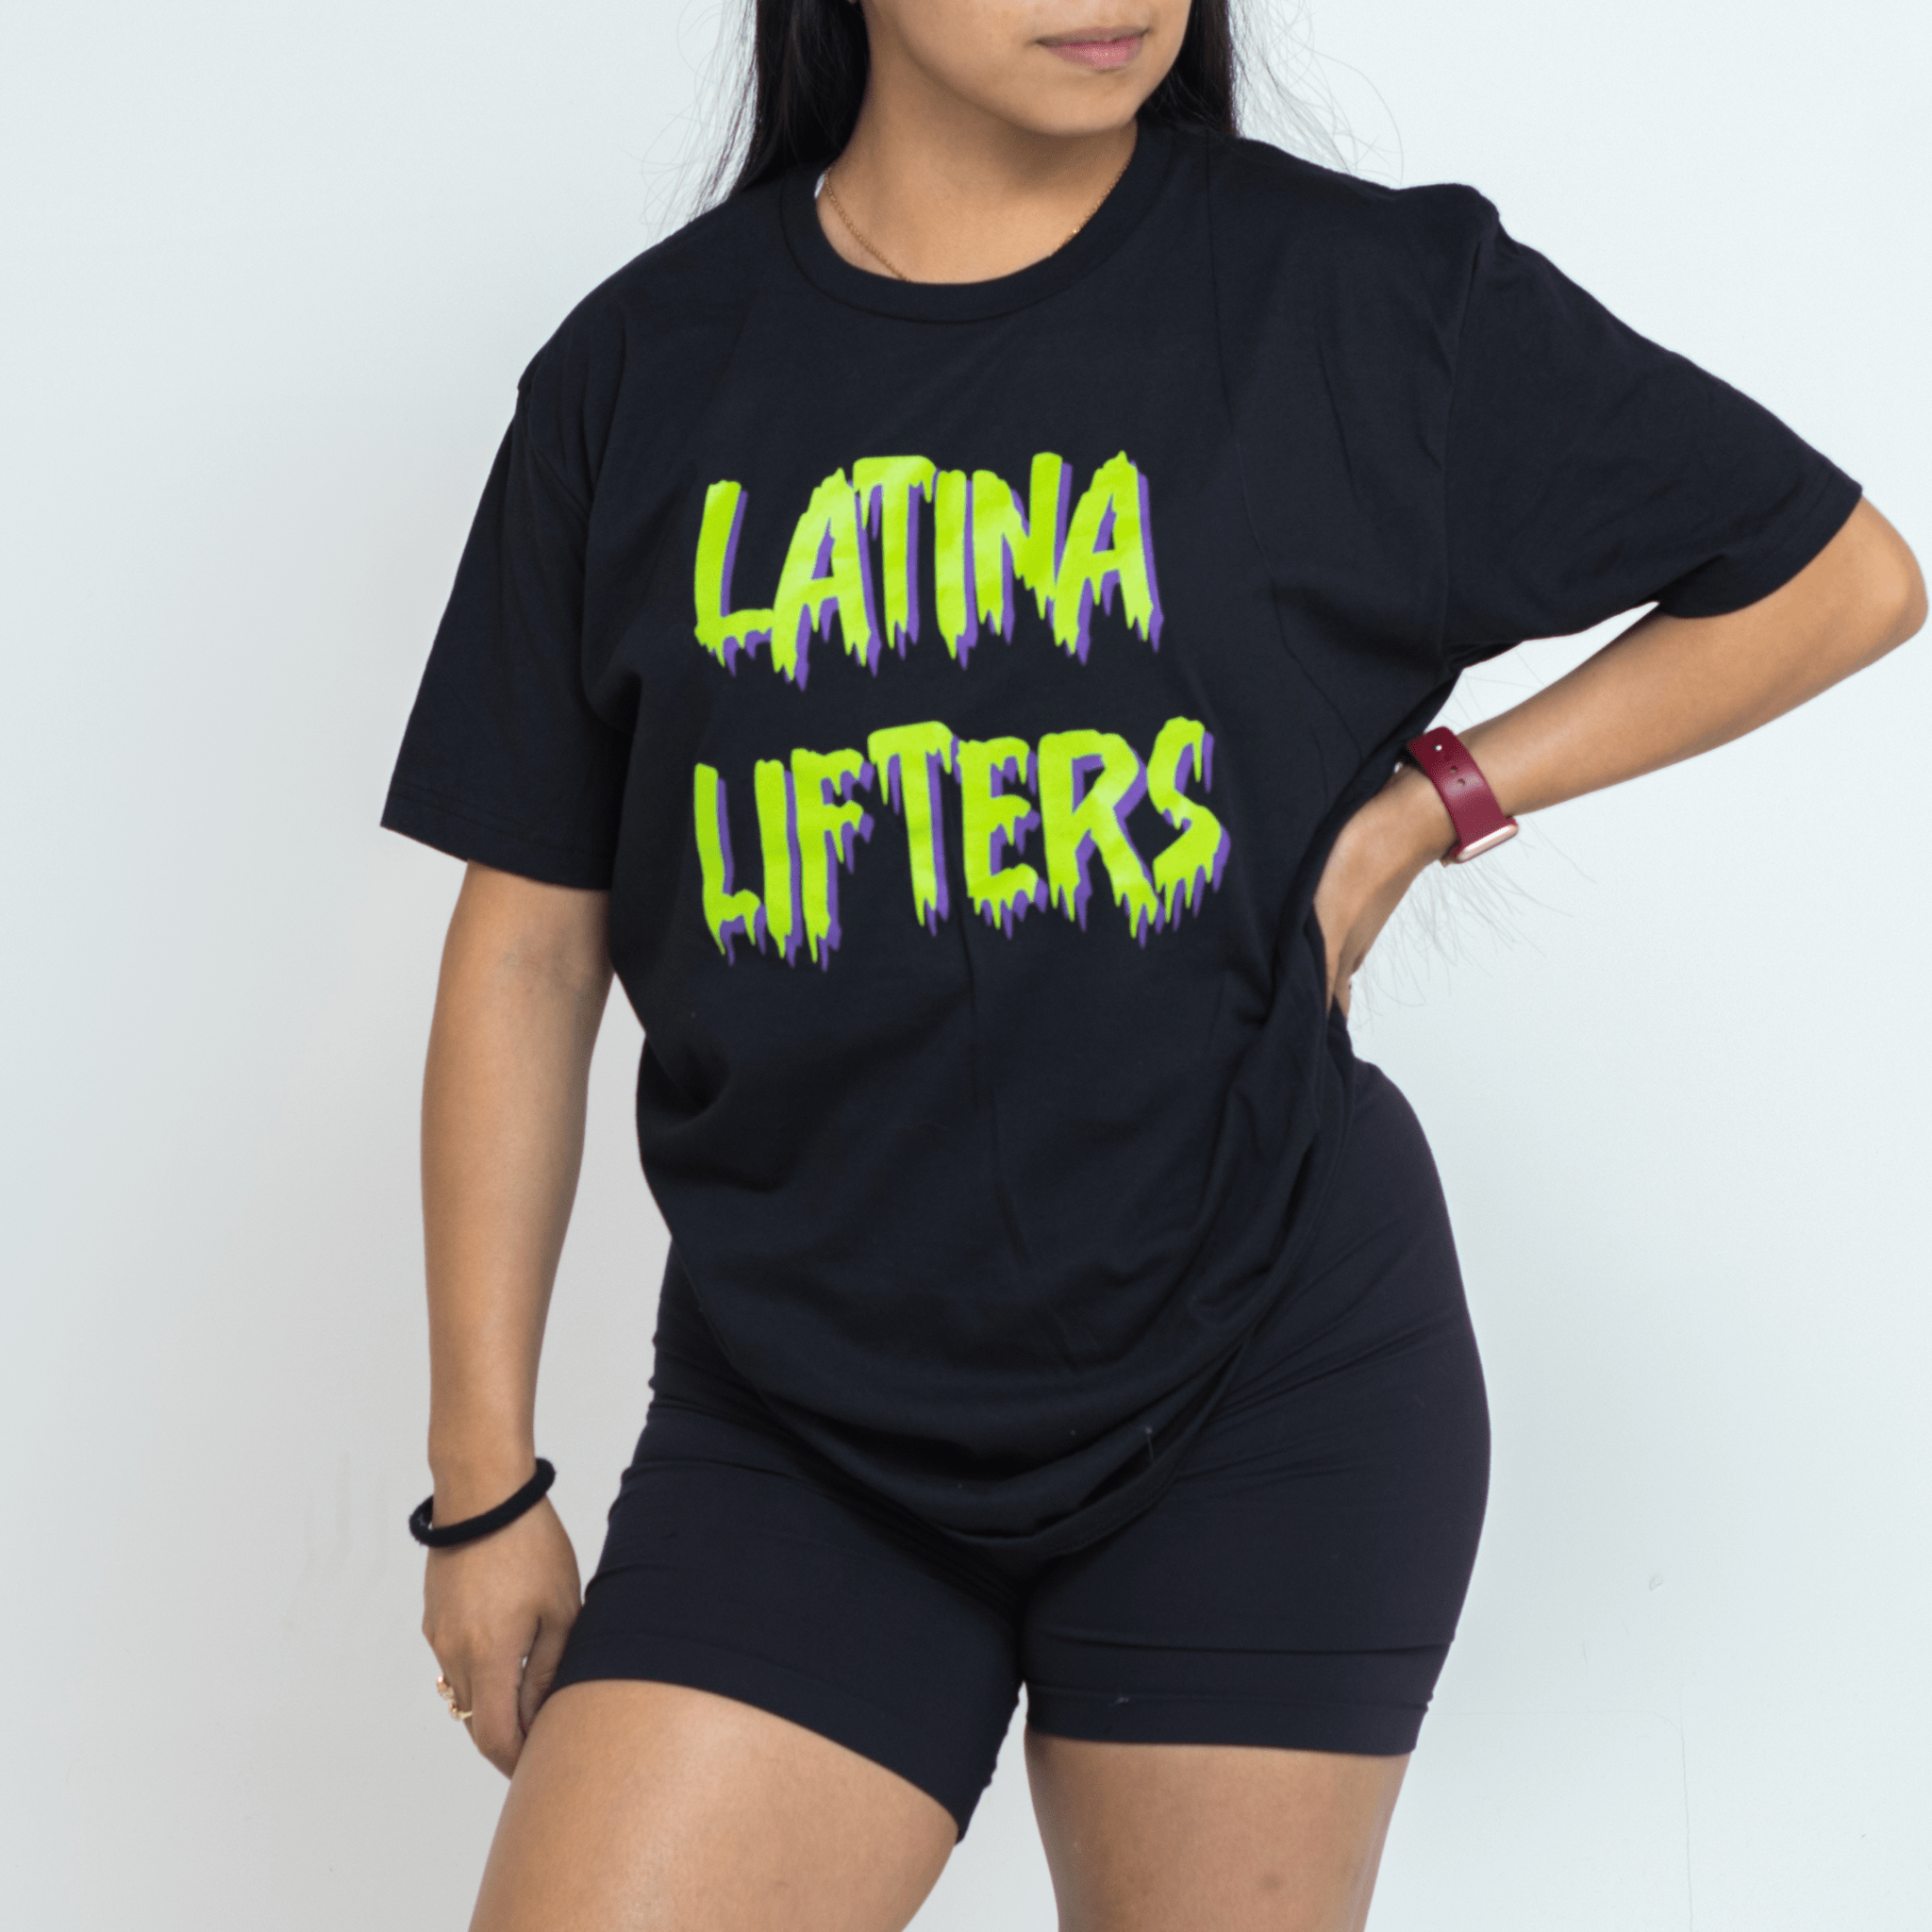 Spooky Lifter - Latina Lifters